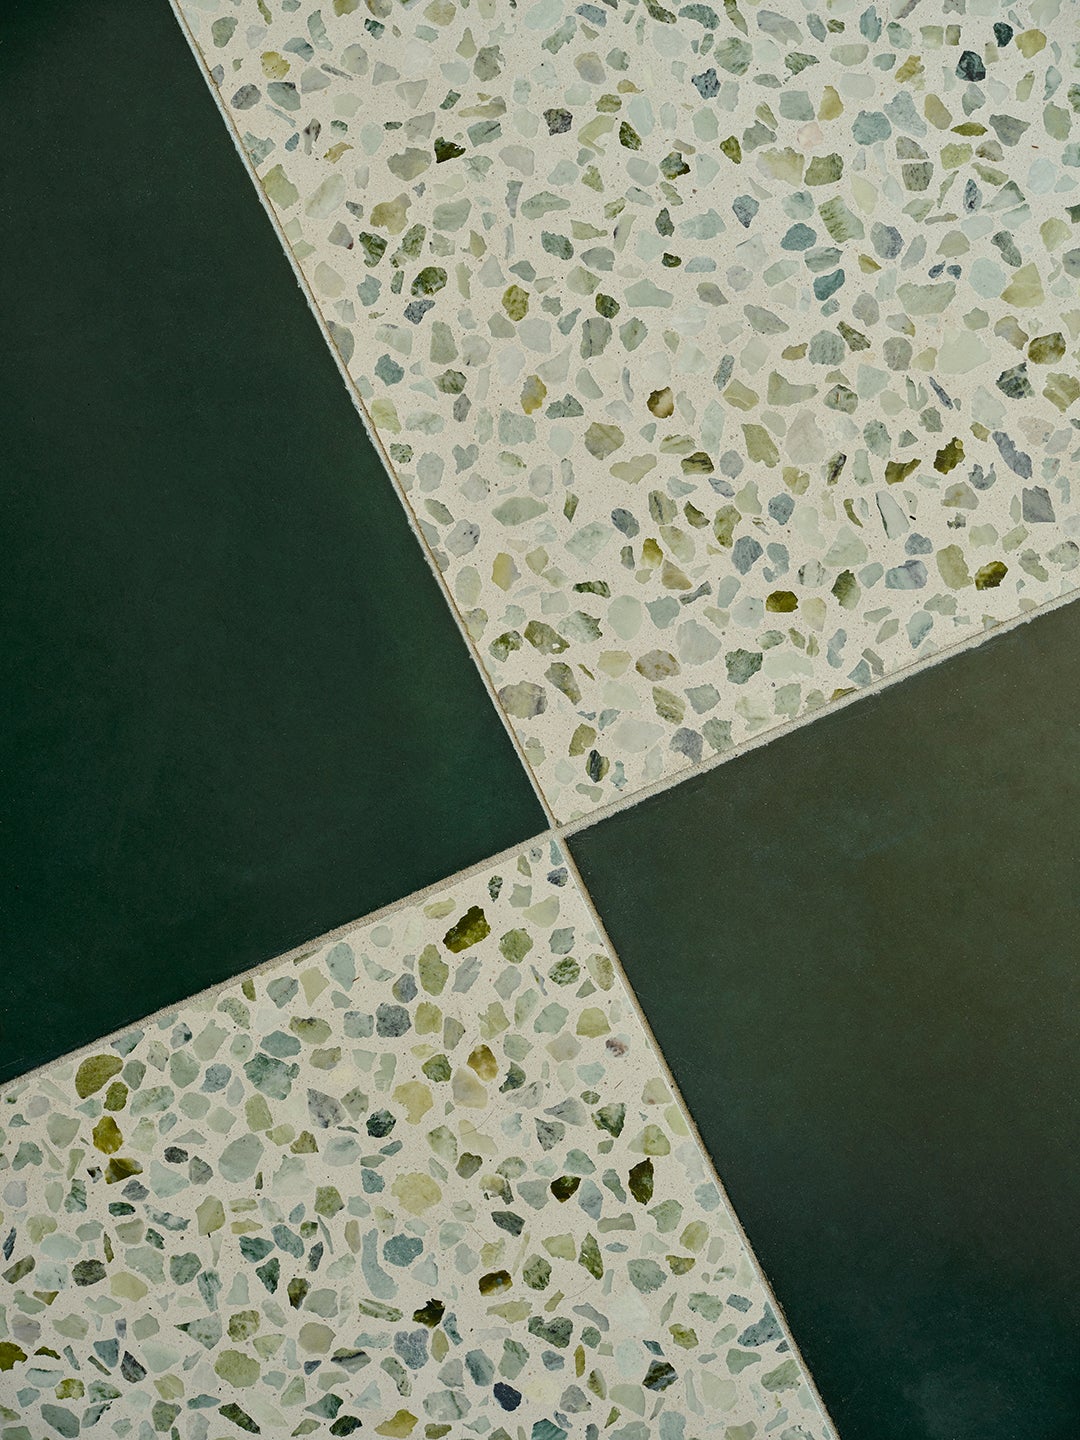 Closeup of checkerboard floor tile